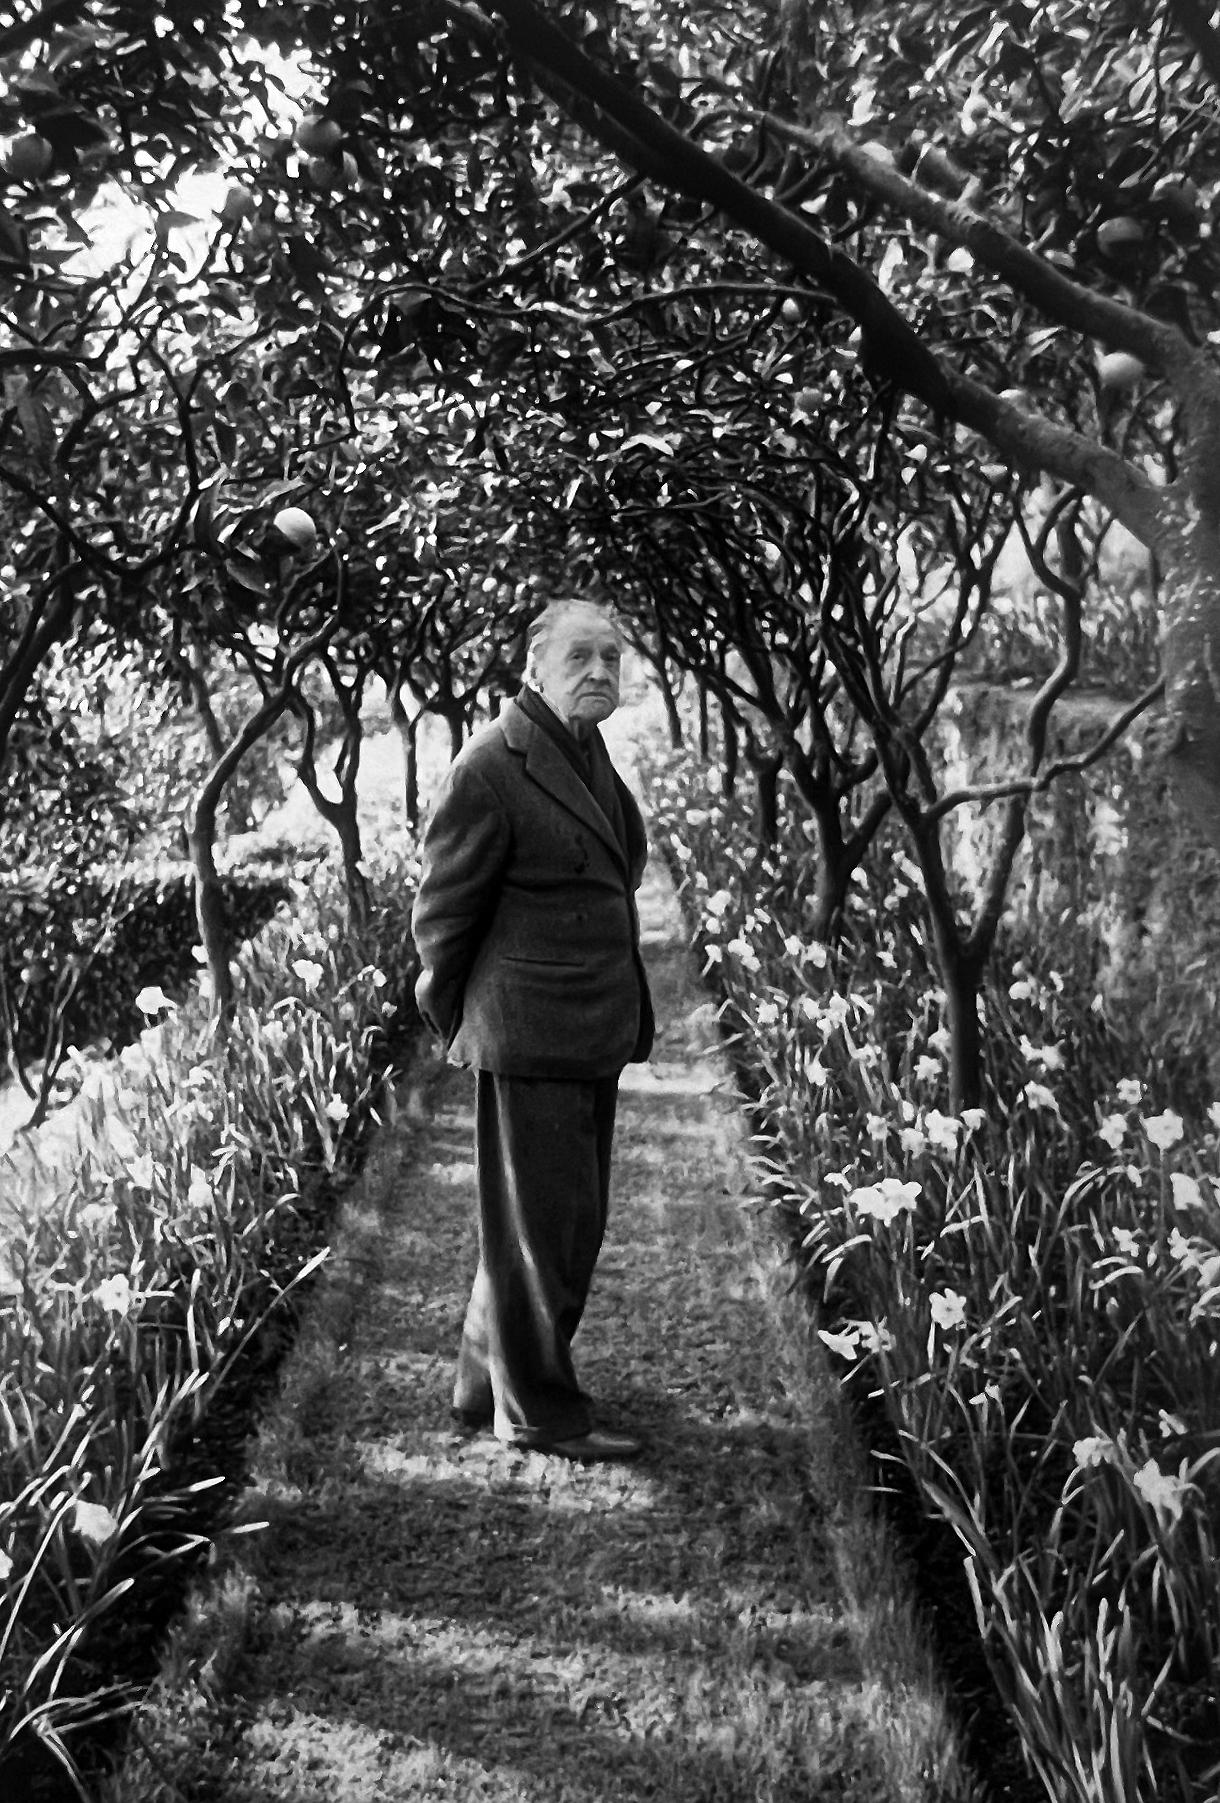 Somerset Maugham, Black and White Photo of English Writer at Cap Ferrat Villa - Photograph by Burt Glinn